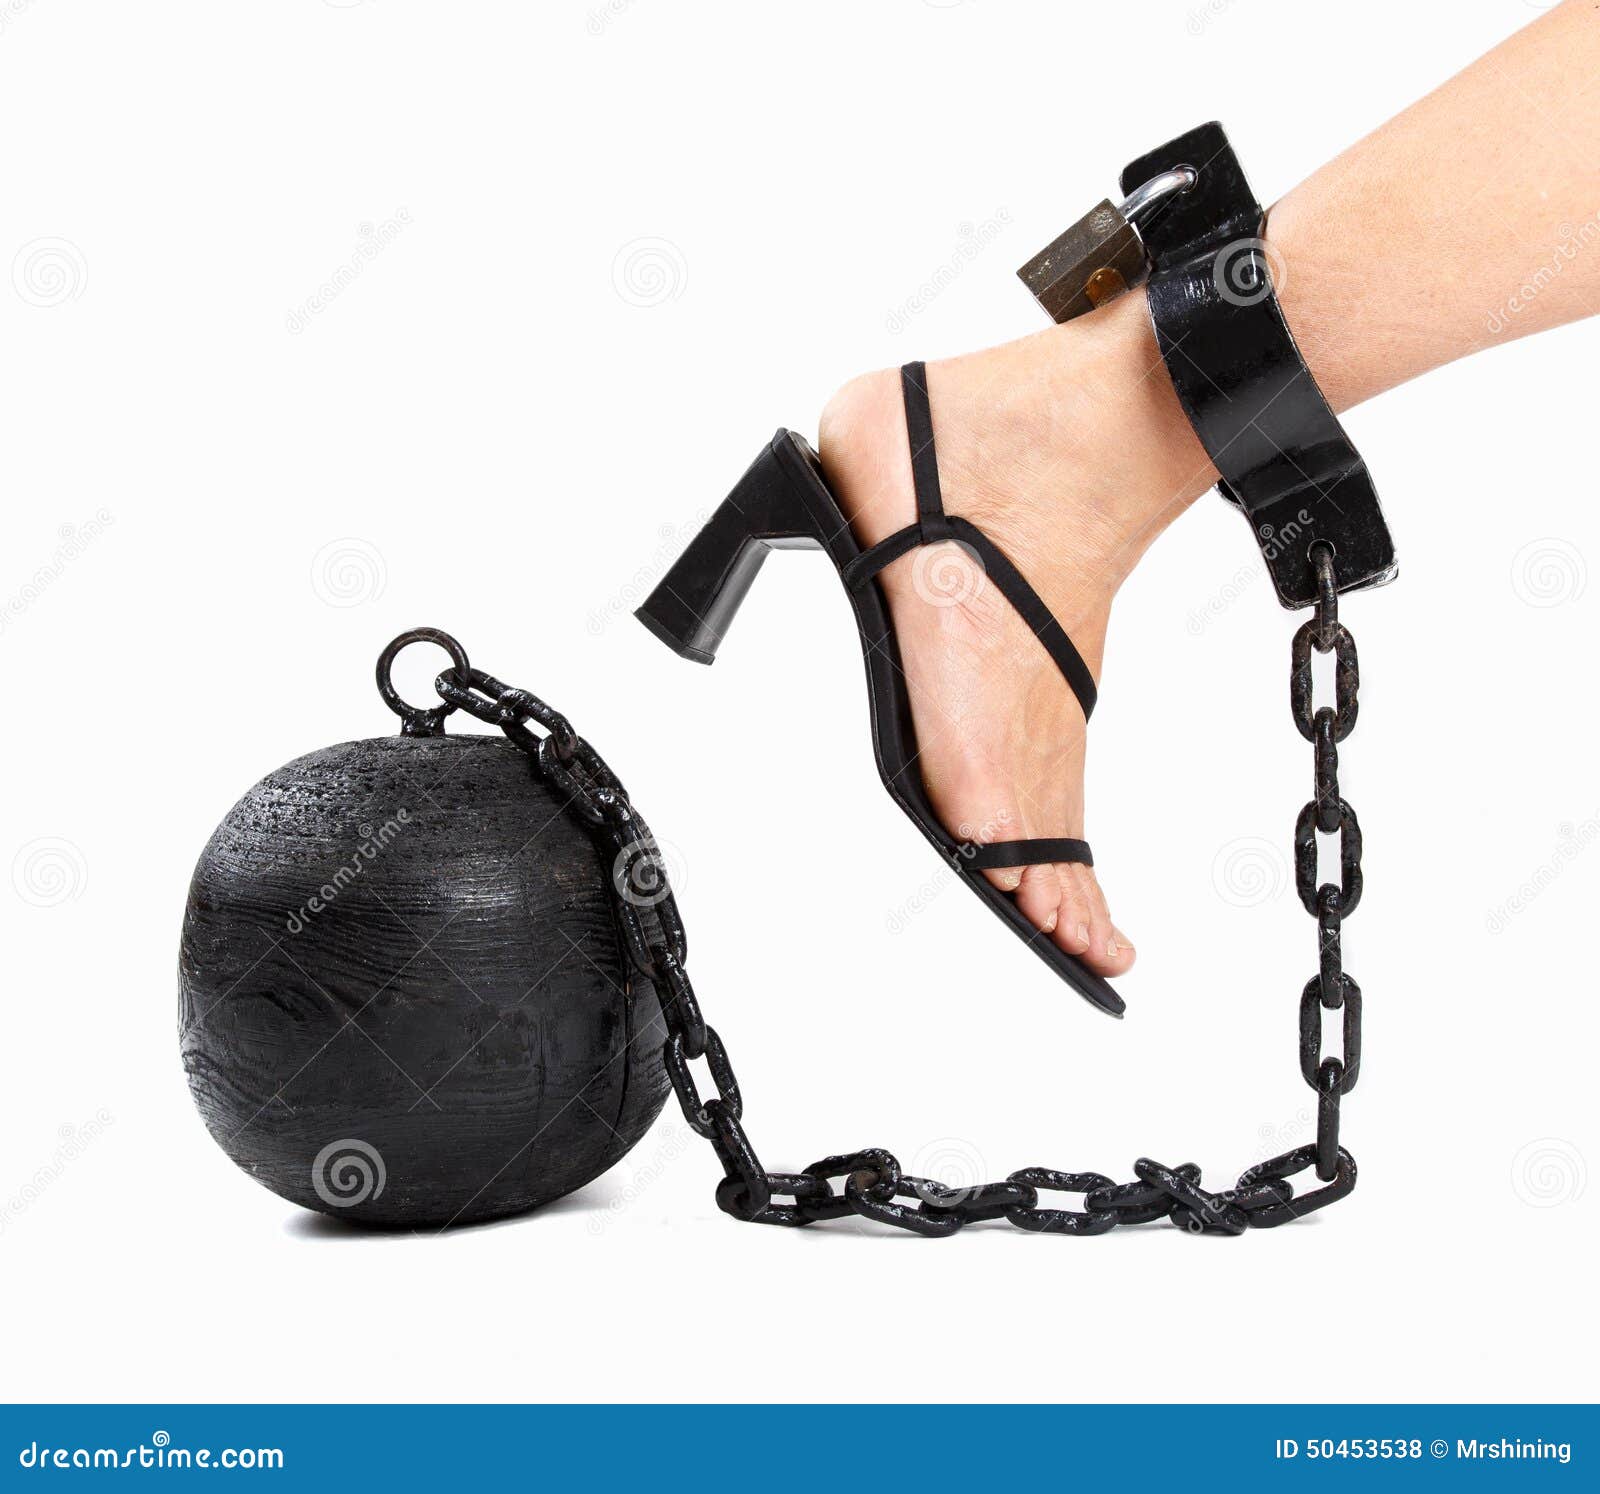 foot-prison-ball-woman-s-50453538.jpg